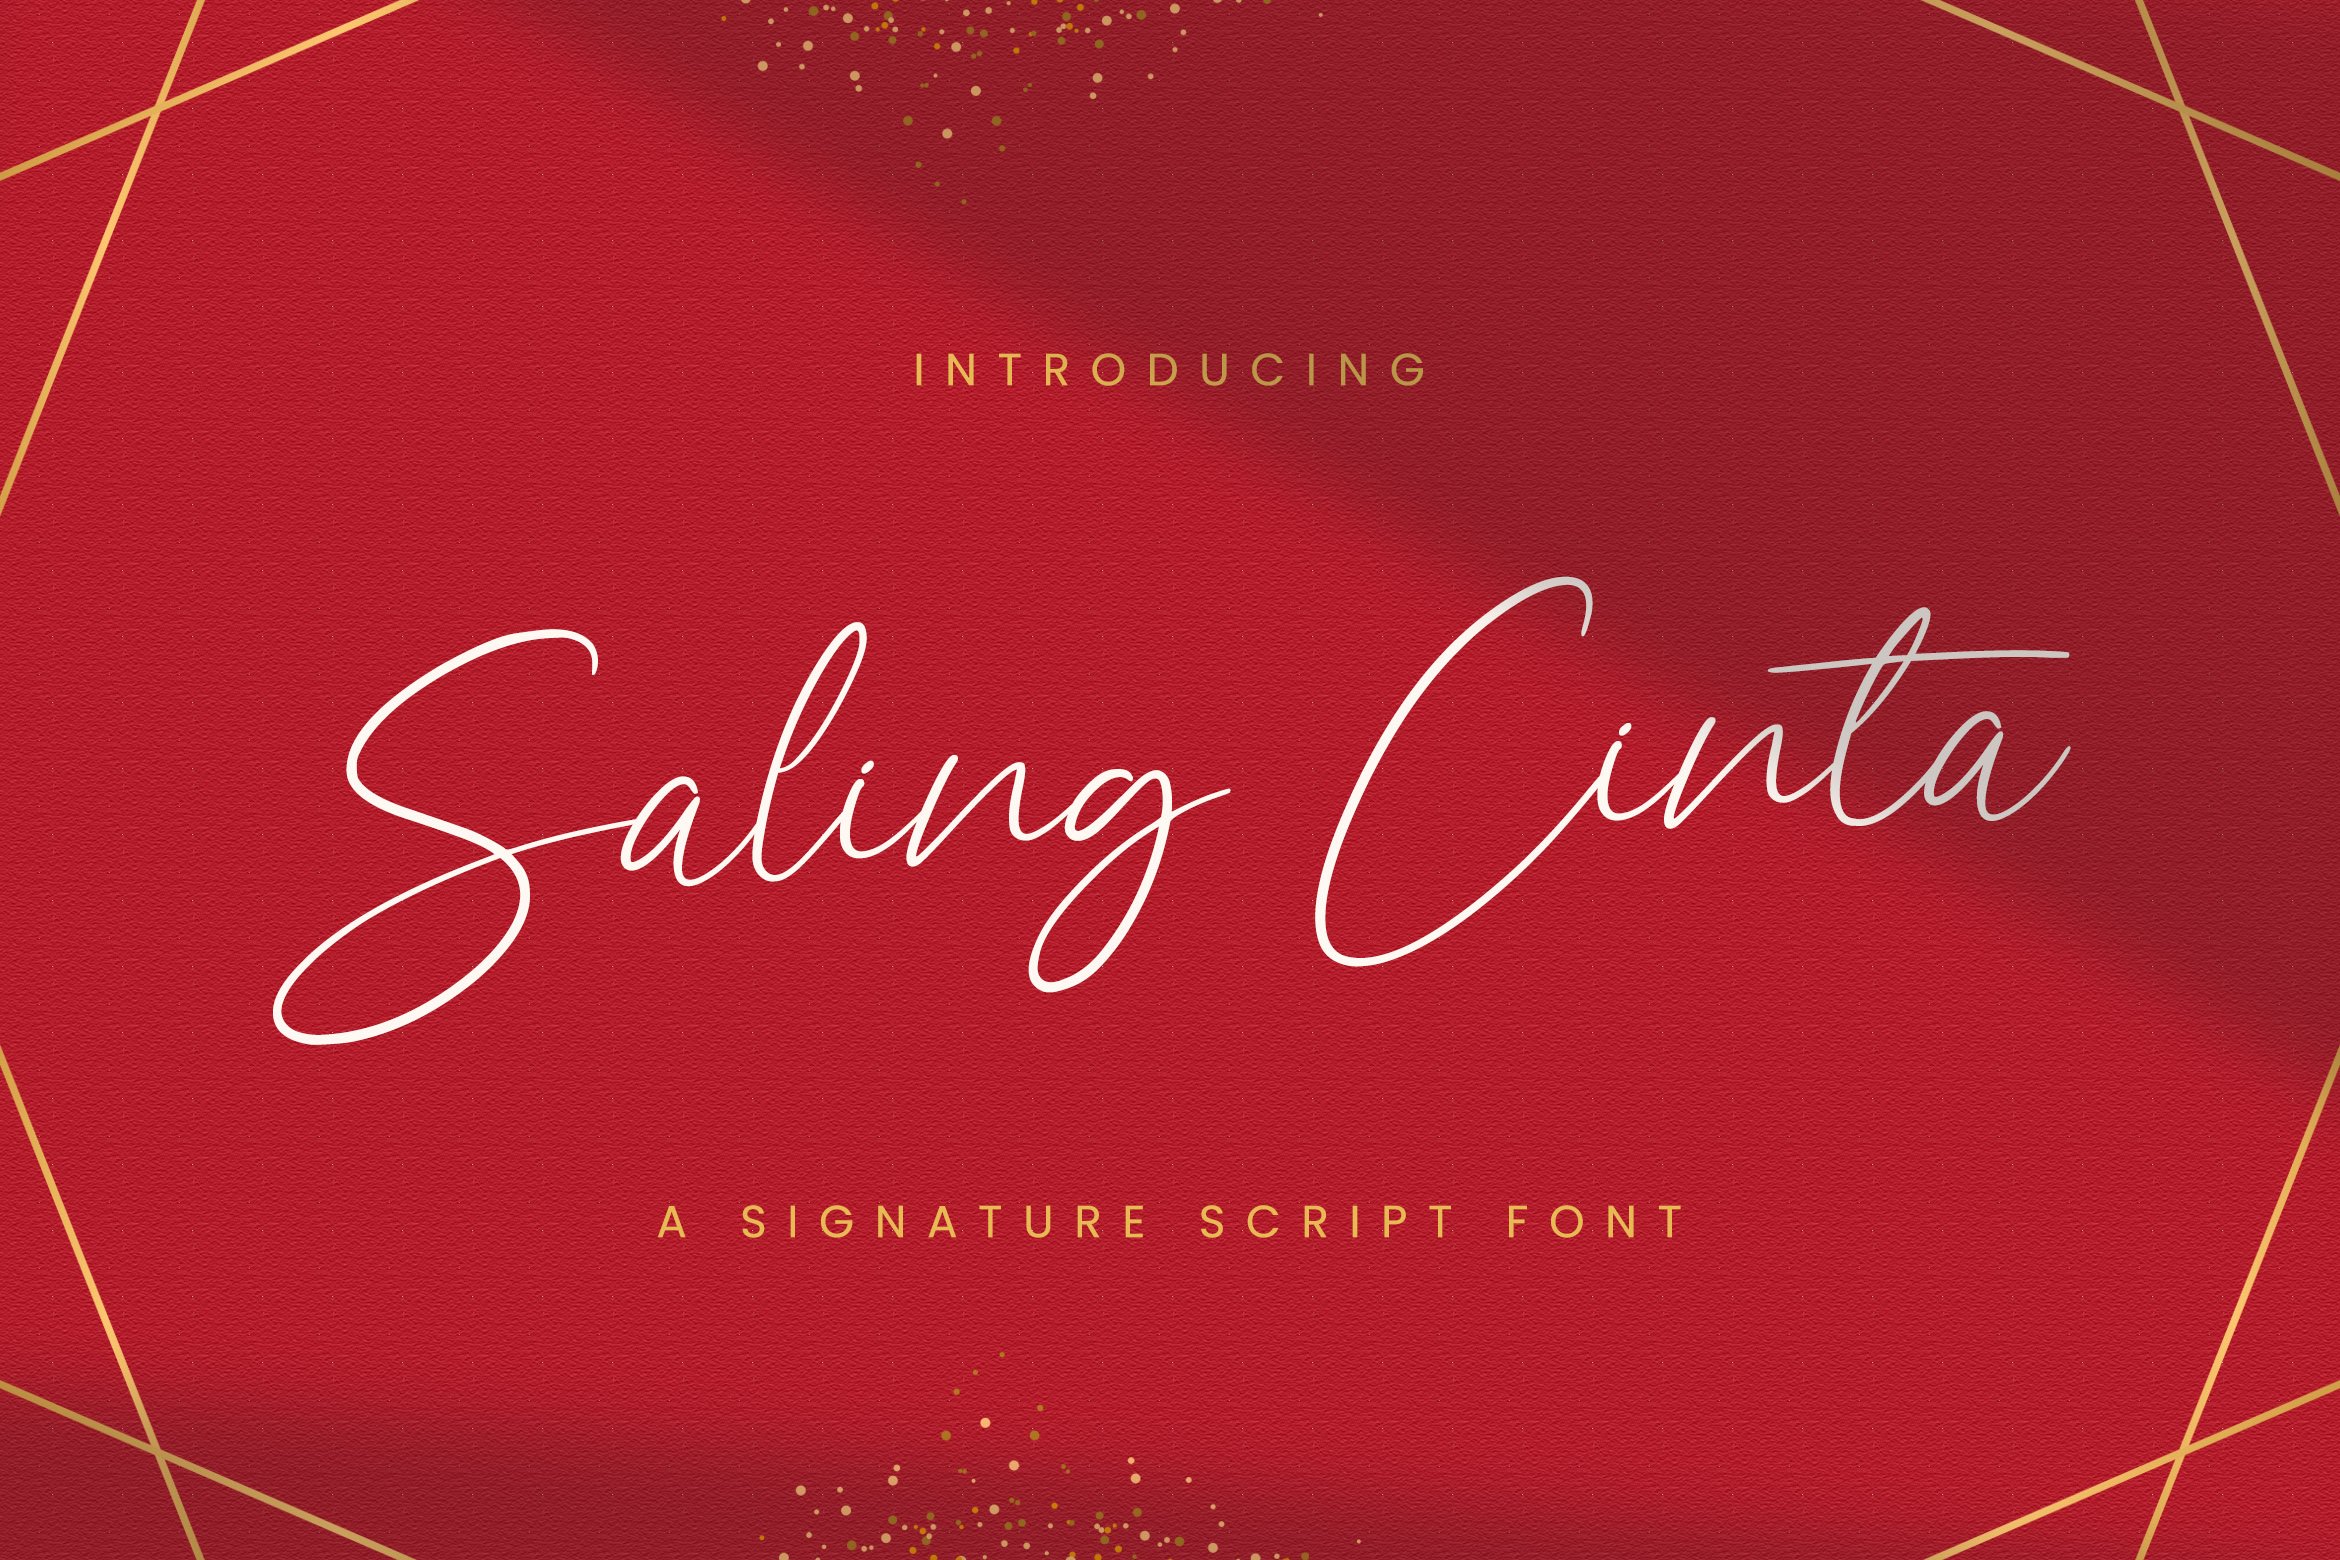 Saling Cinta - Handwritten Font cover image.